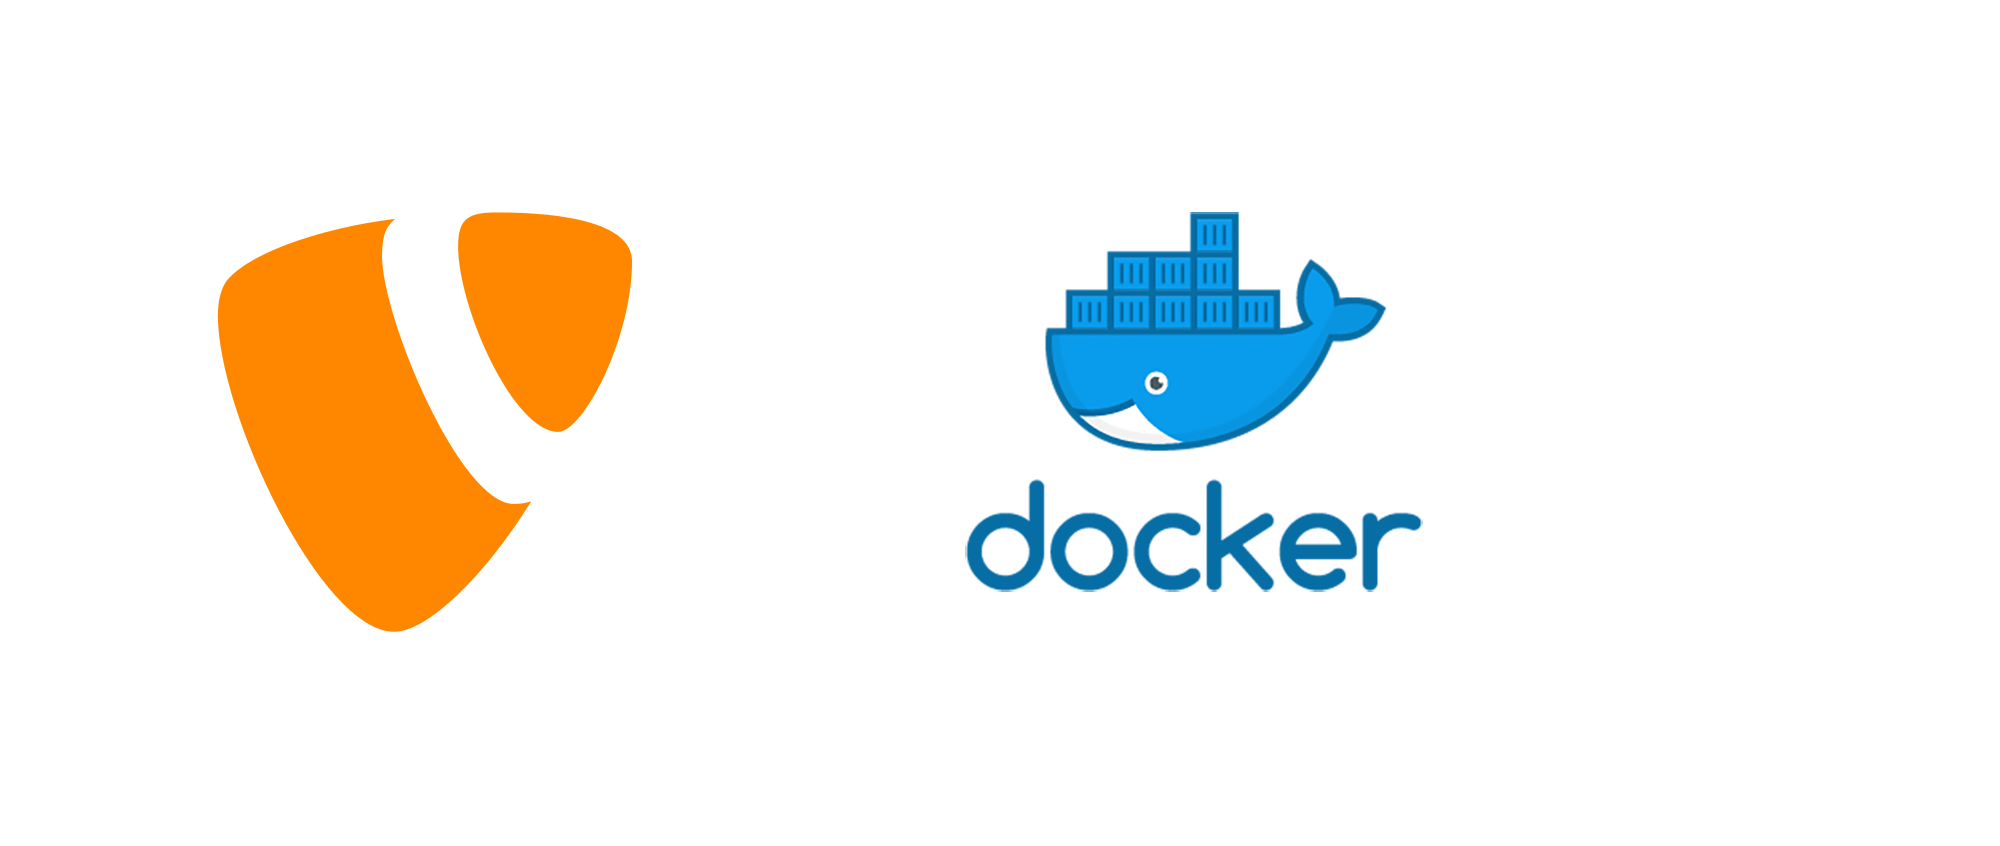 Докер Let it doc. Docker exec user